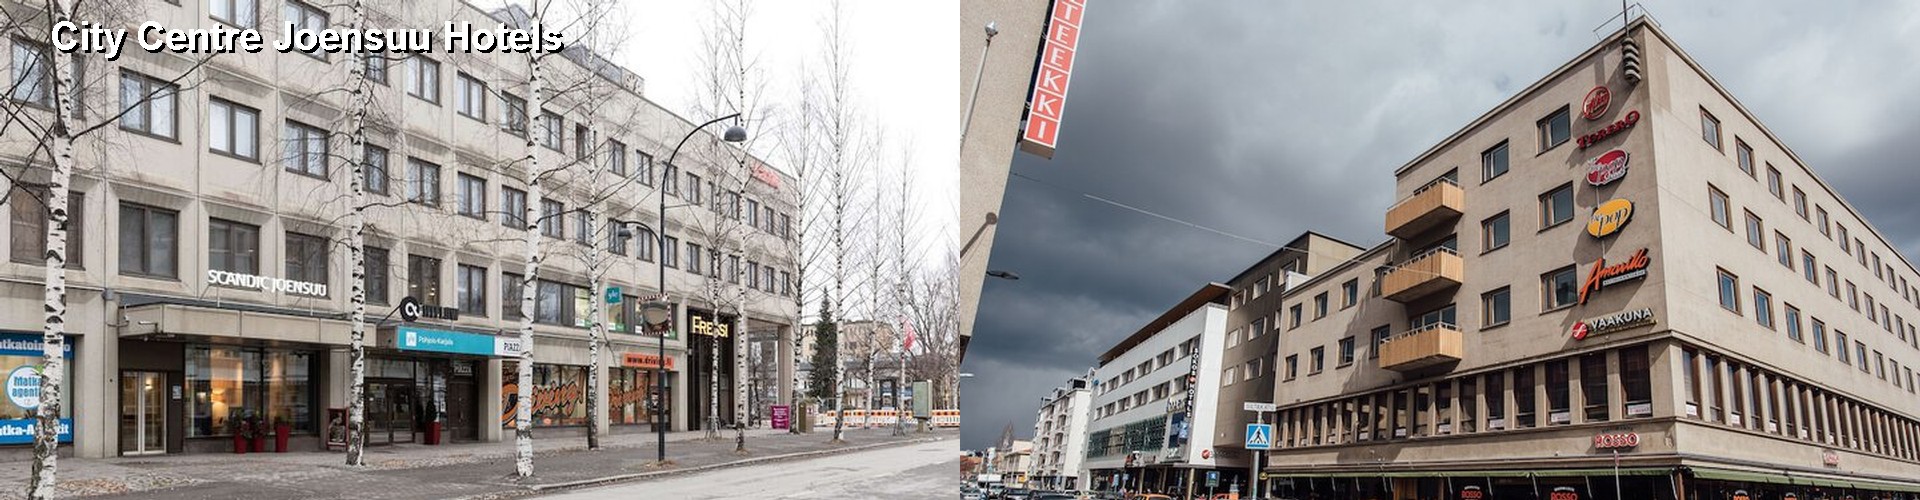 3 Best Hotels near City Centre Joensuu